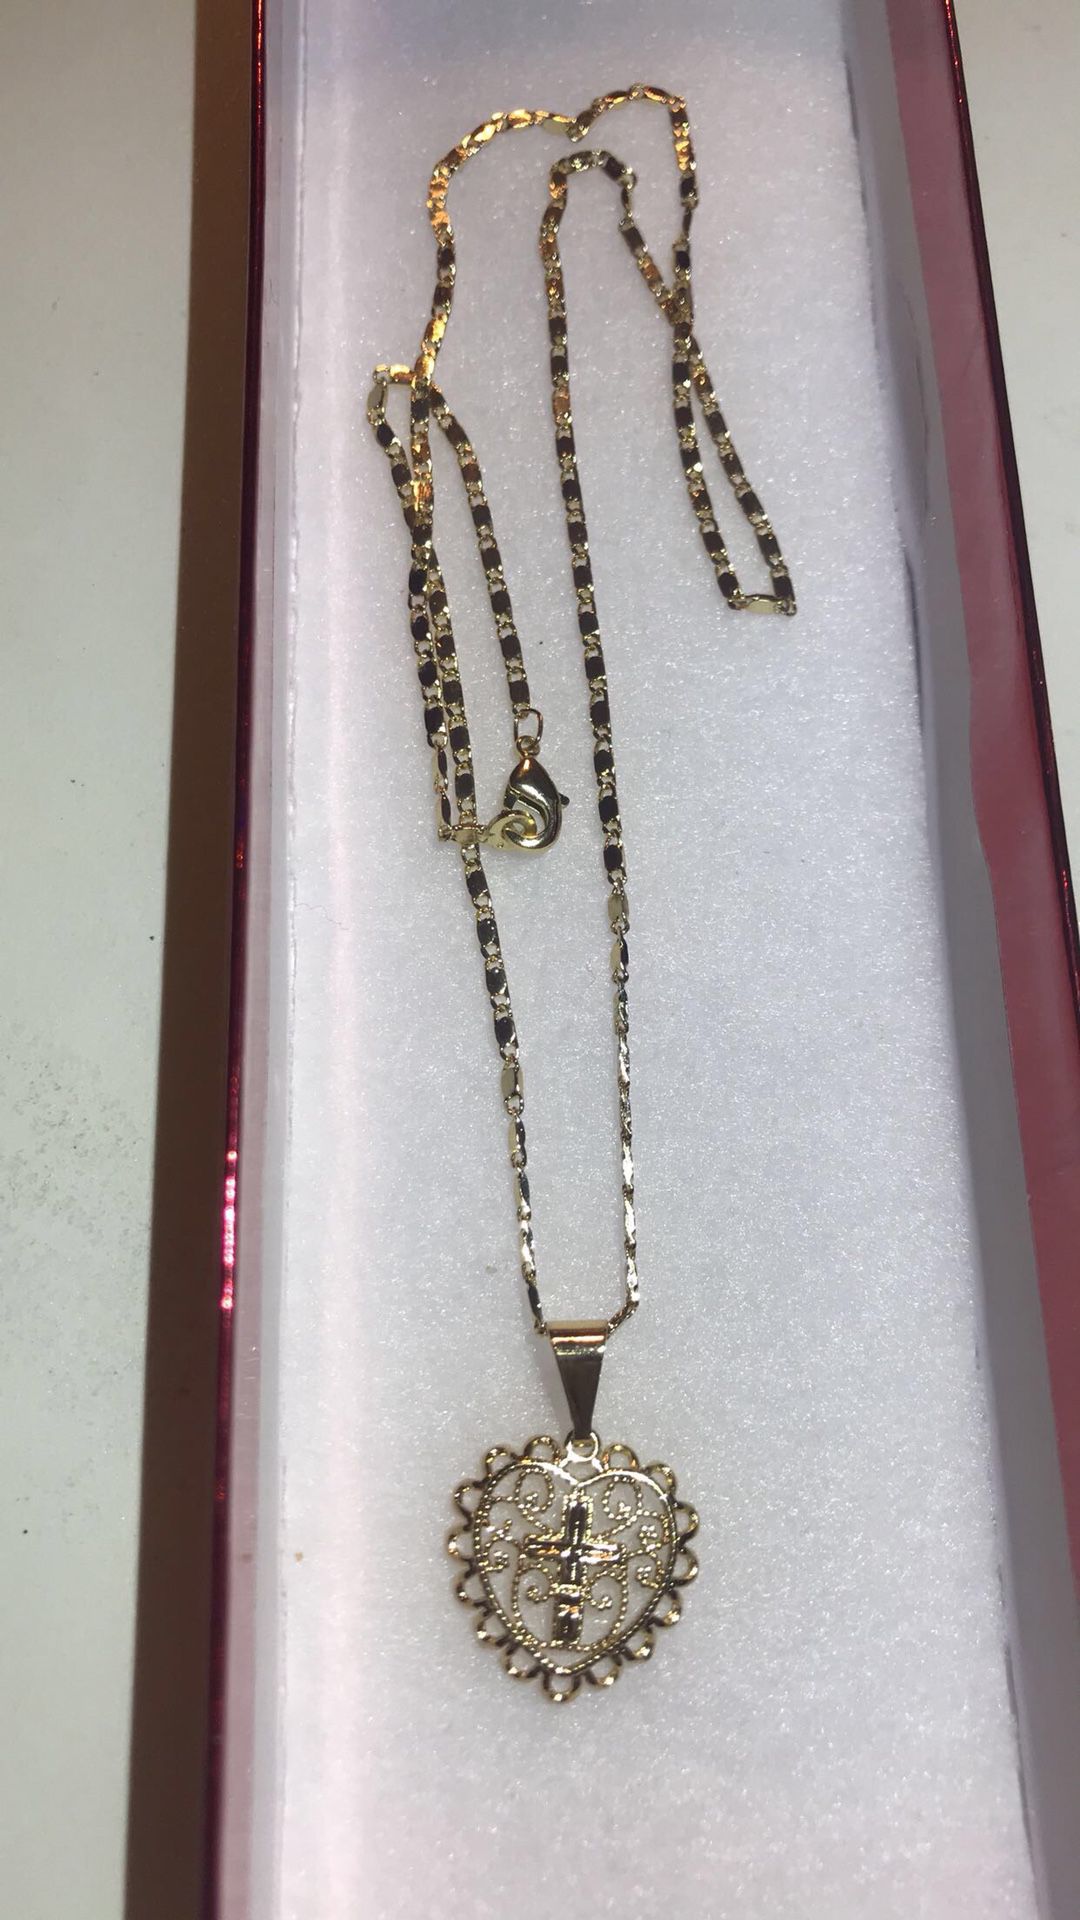 Nice chain and pendant